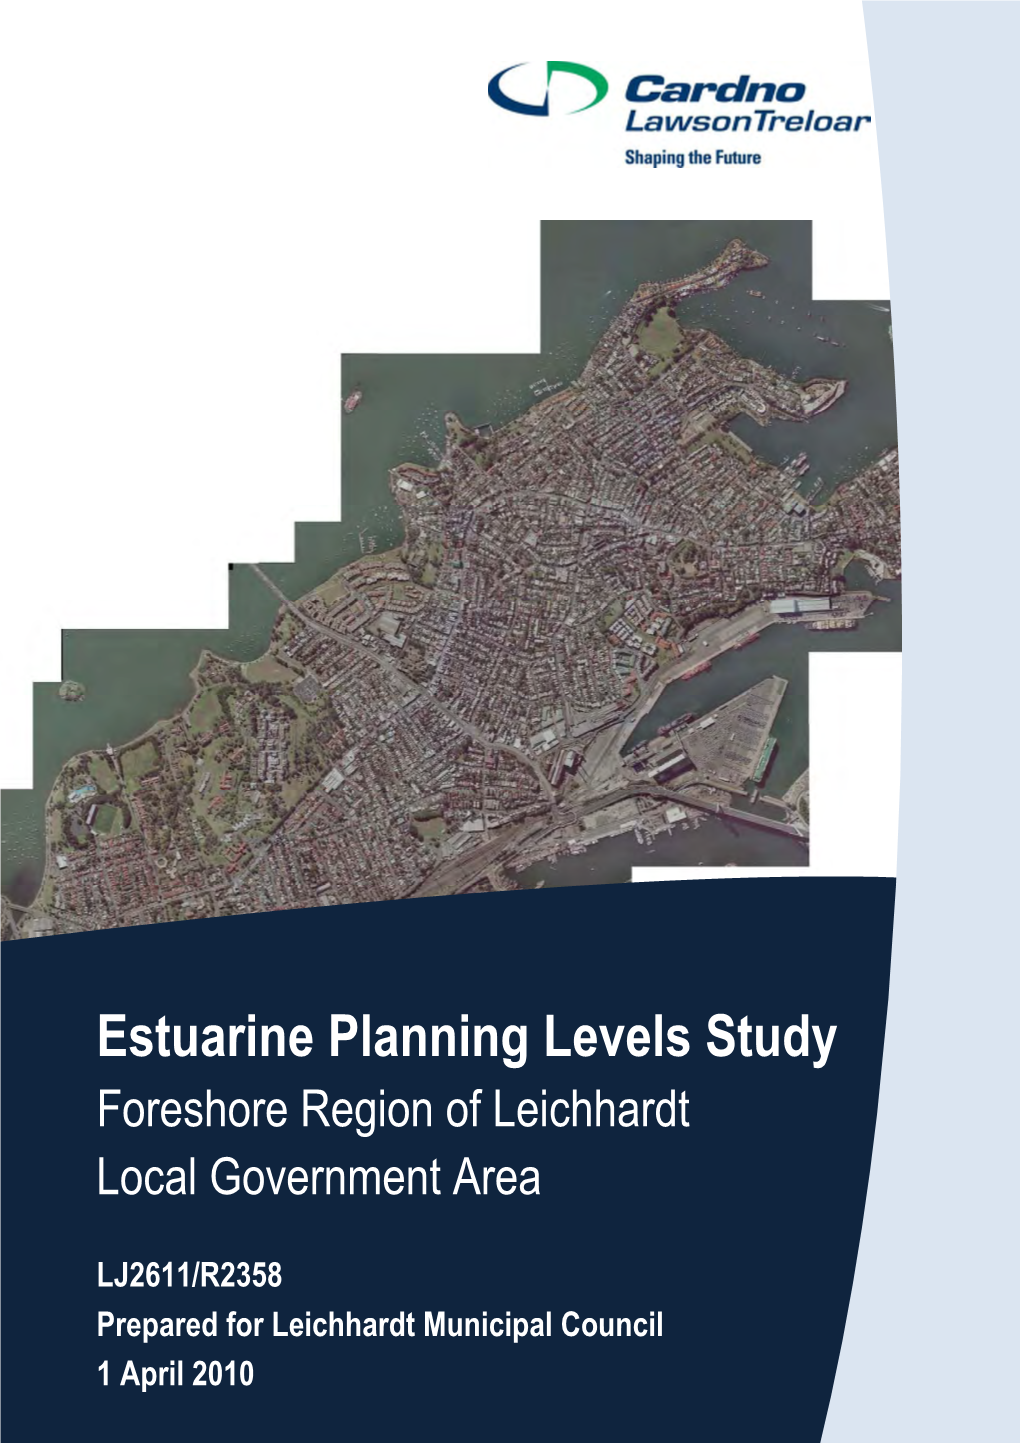 Leichhardt Estuarine Planning Levels Study